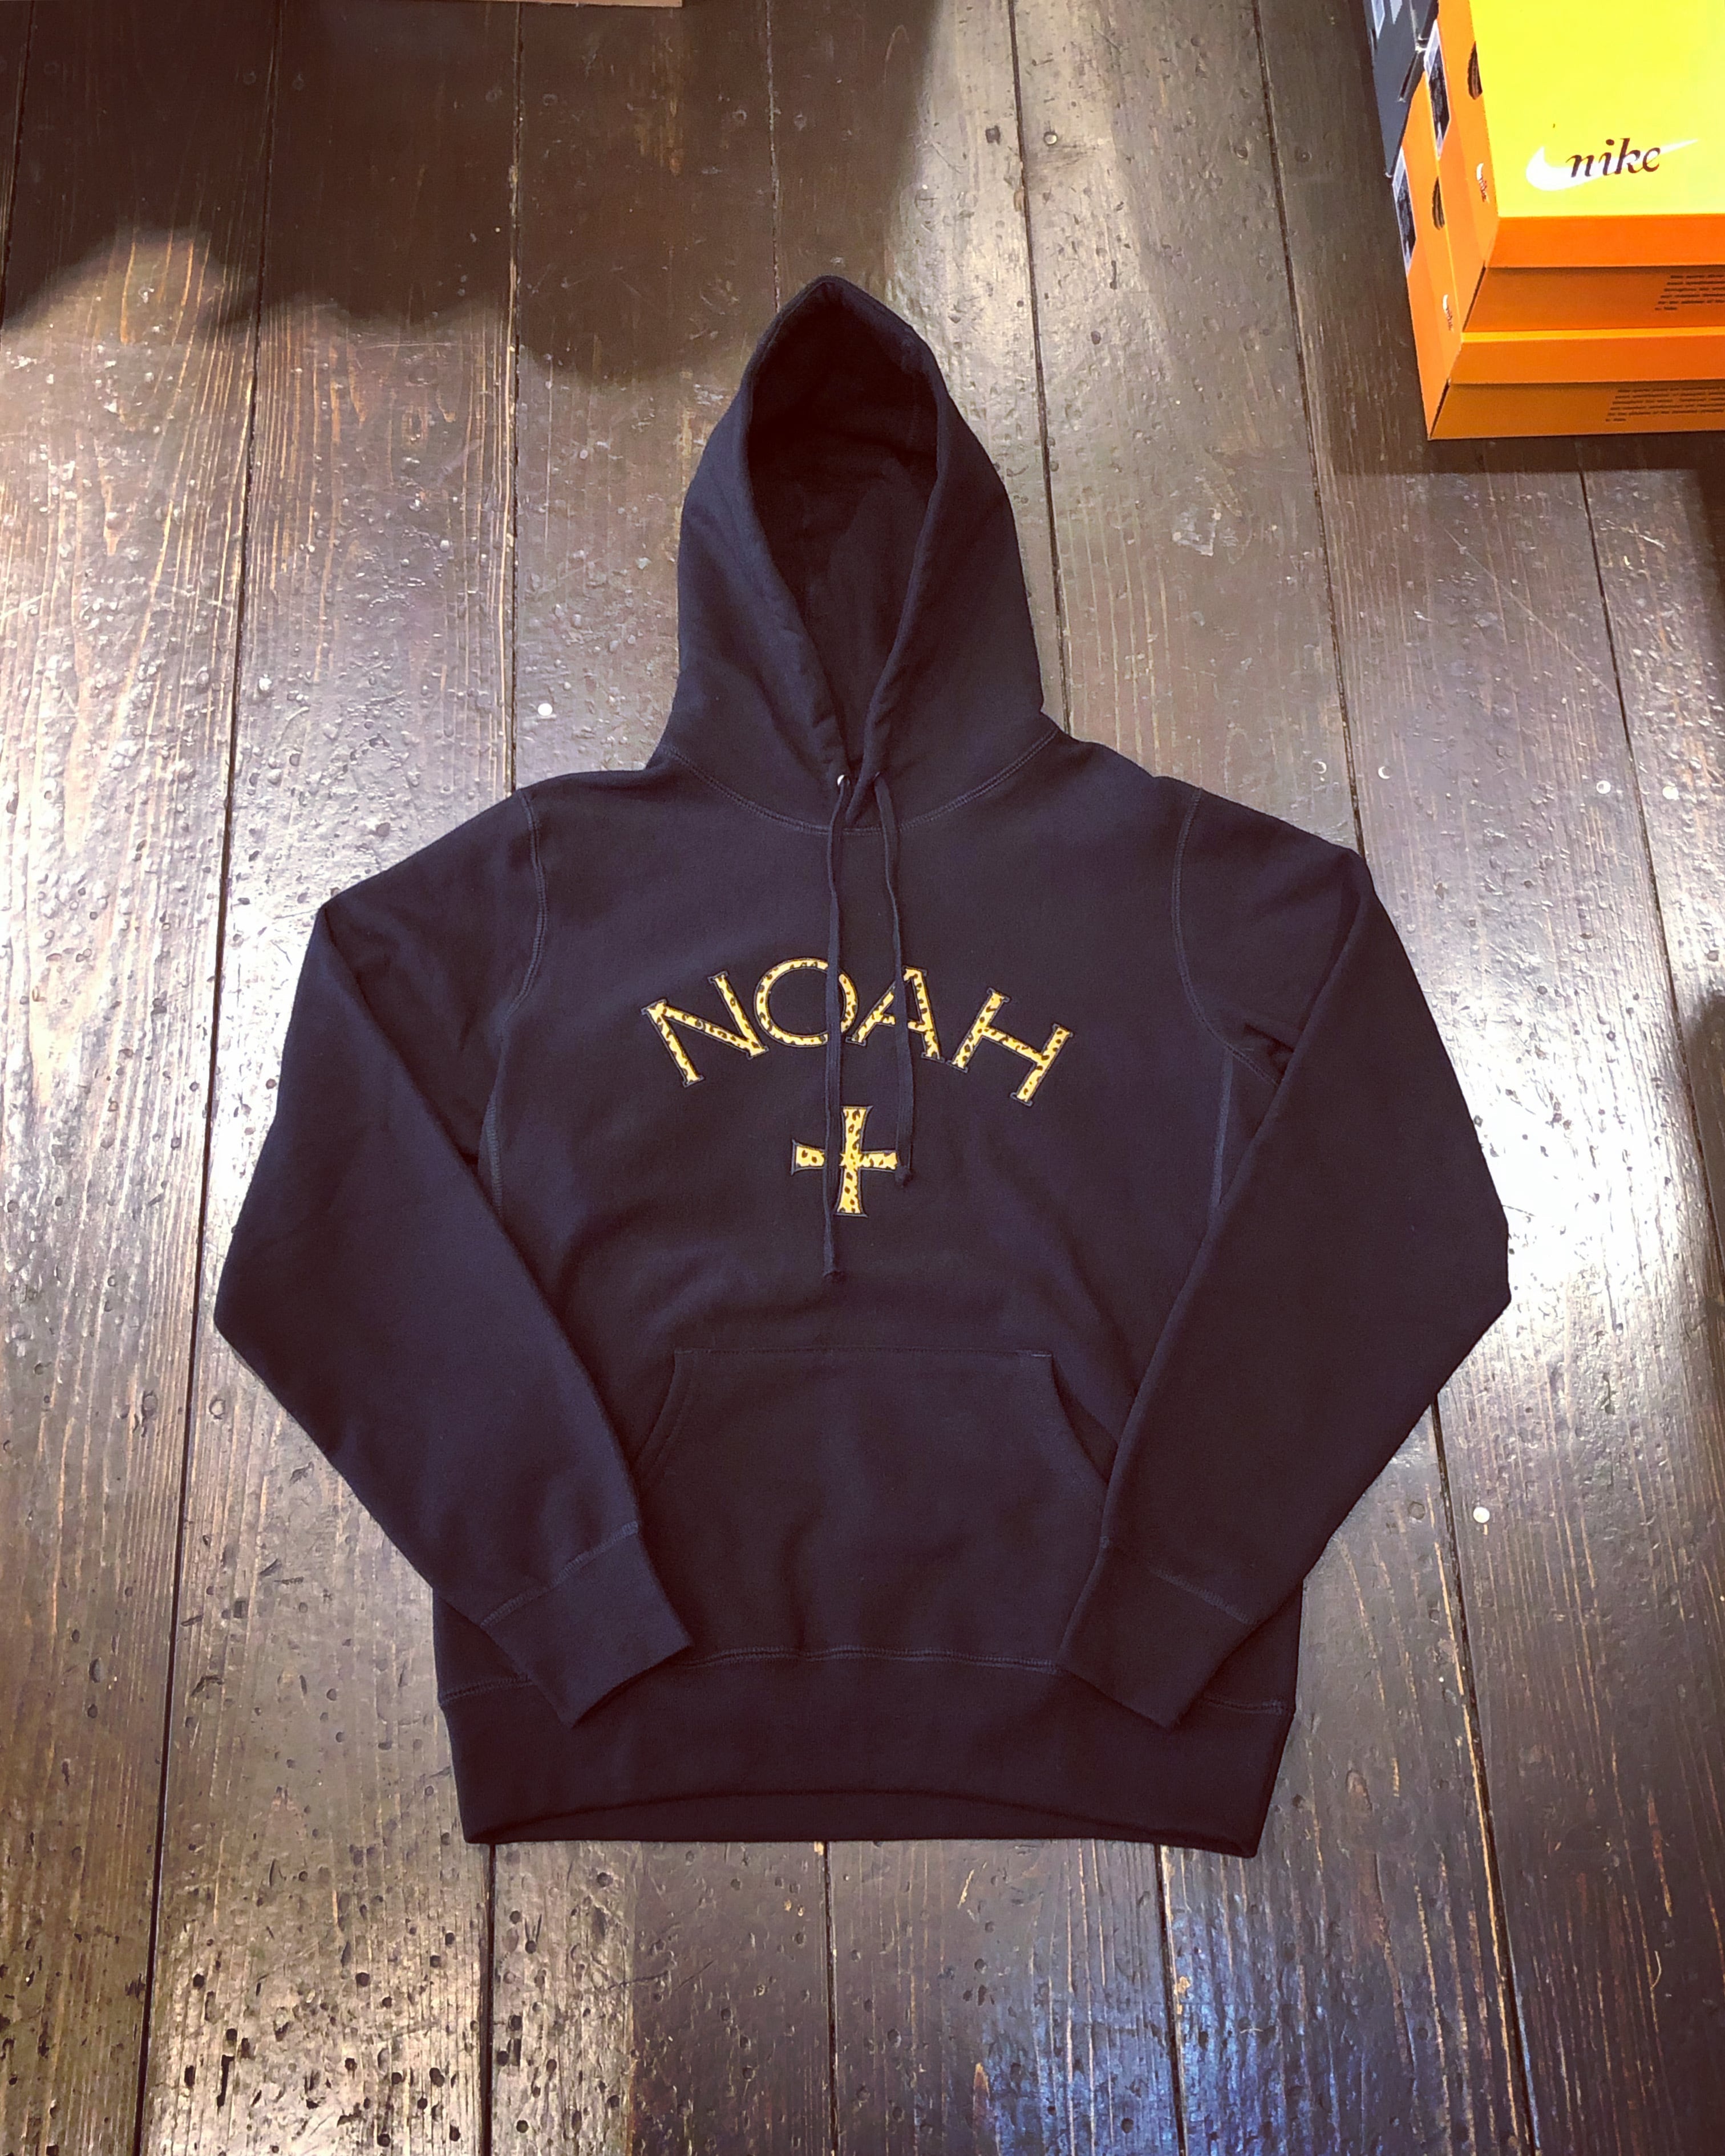 NOAH NYC Core Logo Hoodie M Black